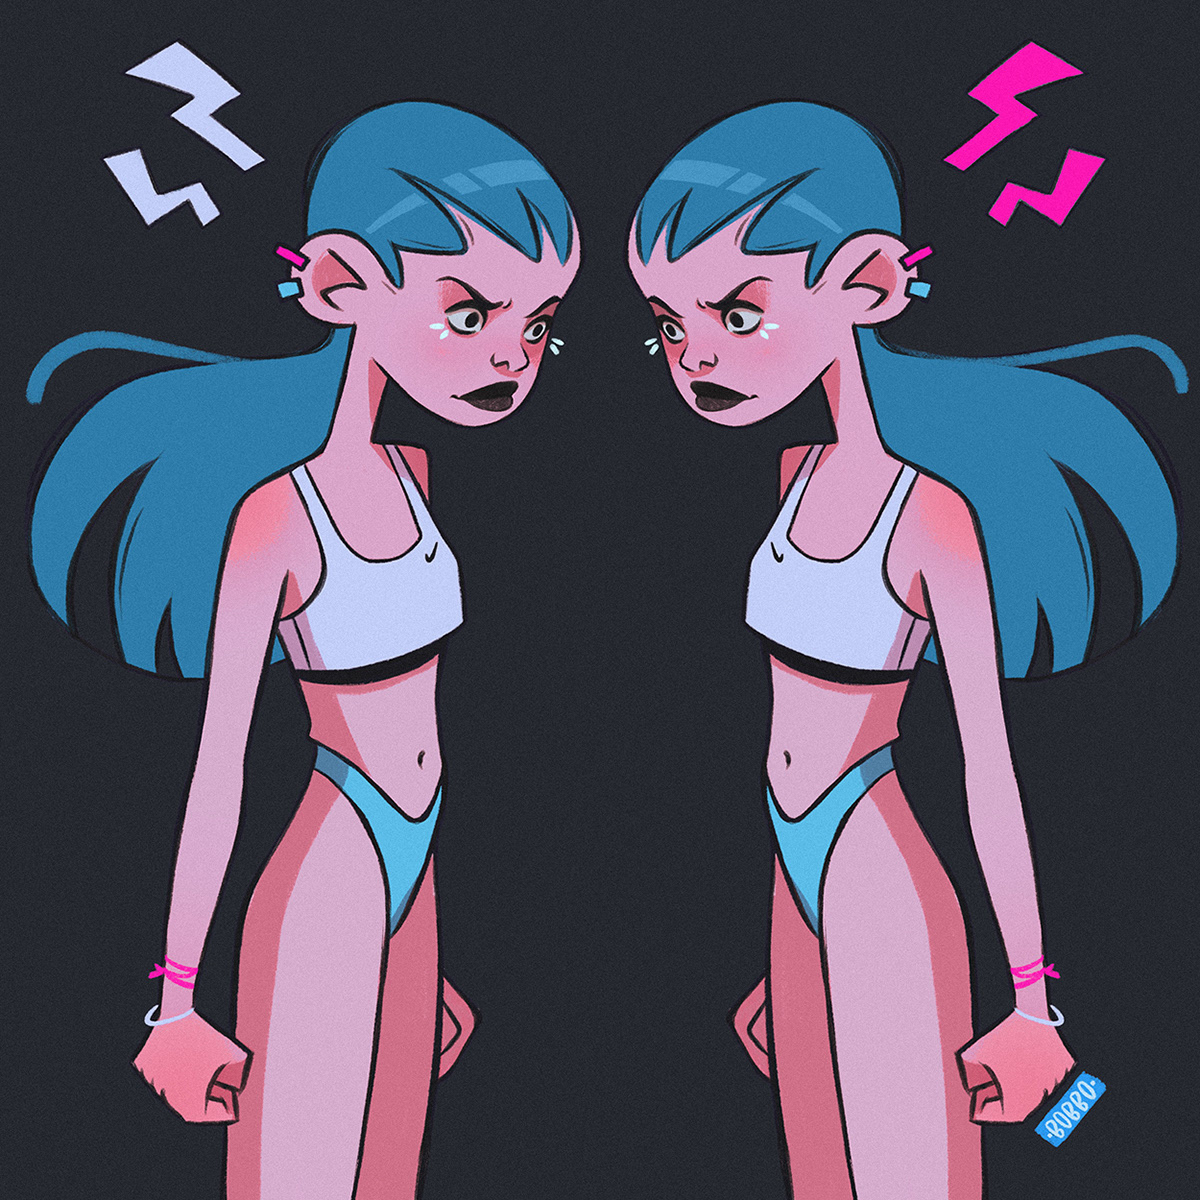 characterdesign conceptart DigitalIllustration femalecharacters ILLUSTRATION  procreatecharacters Twins